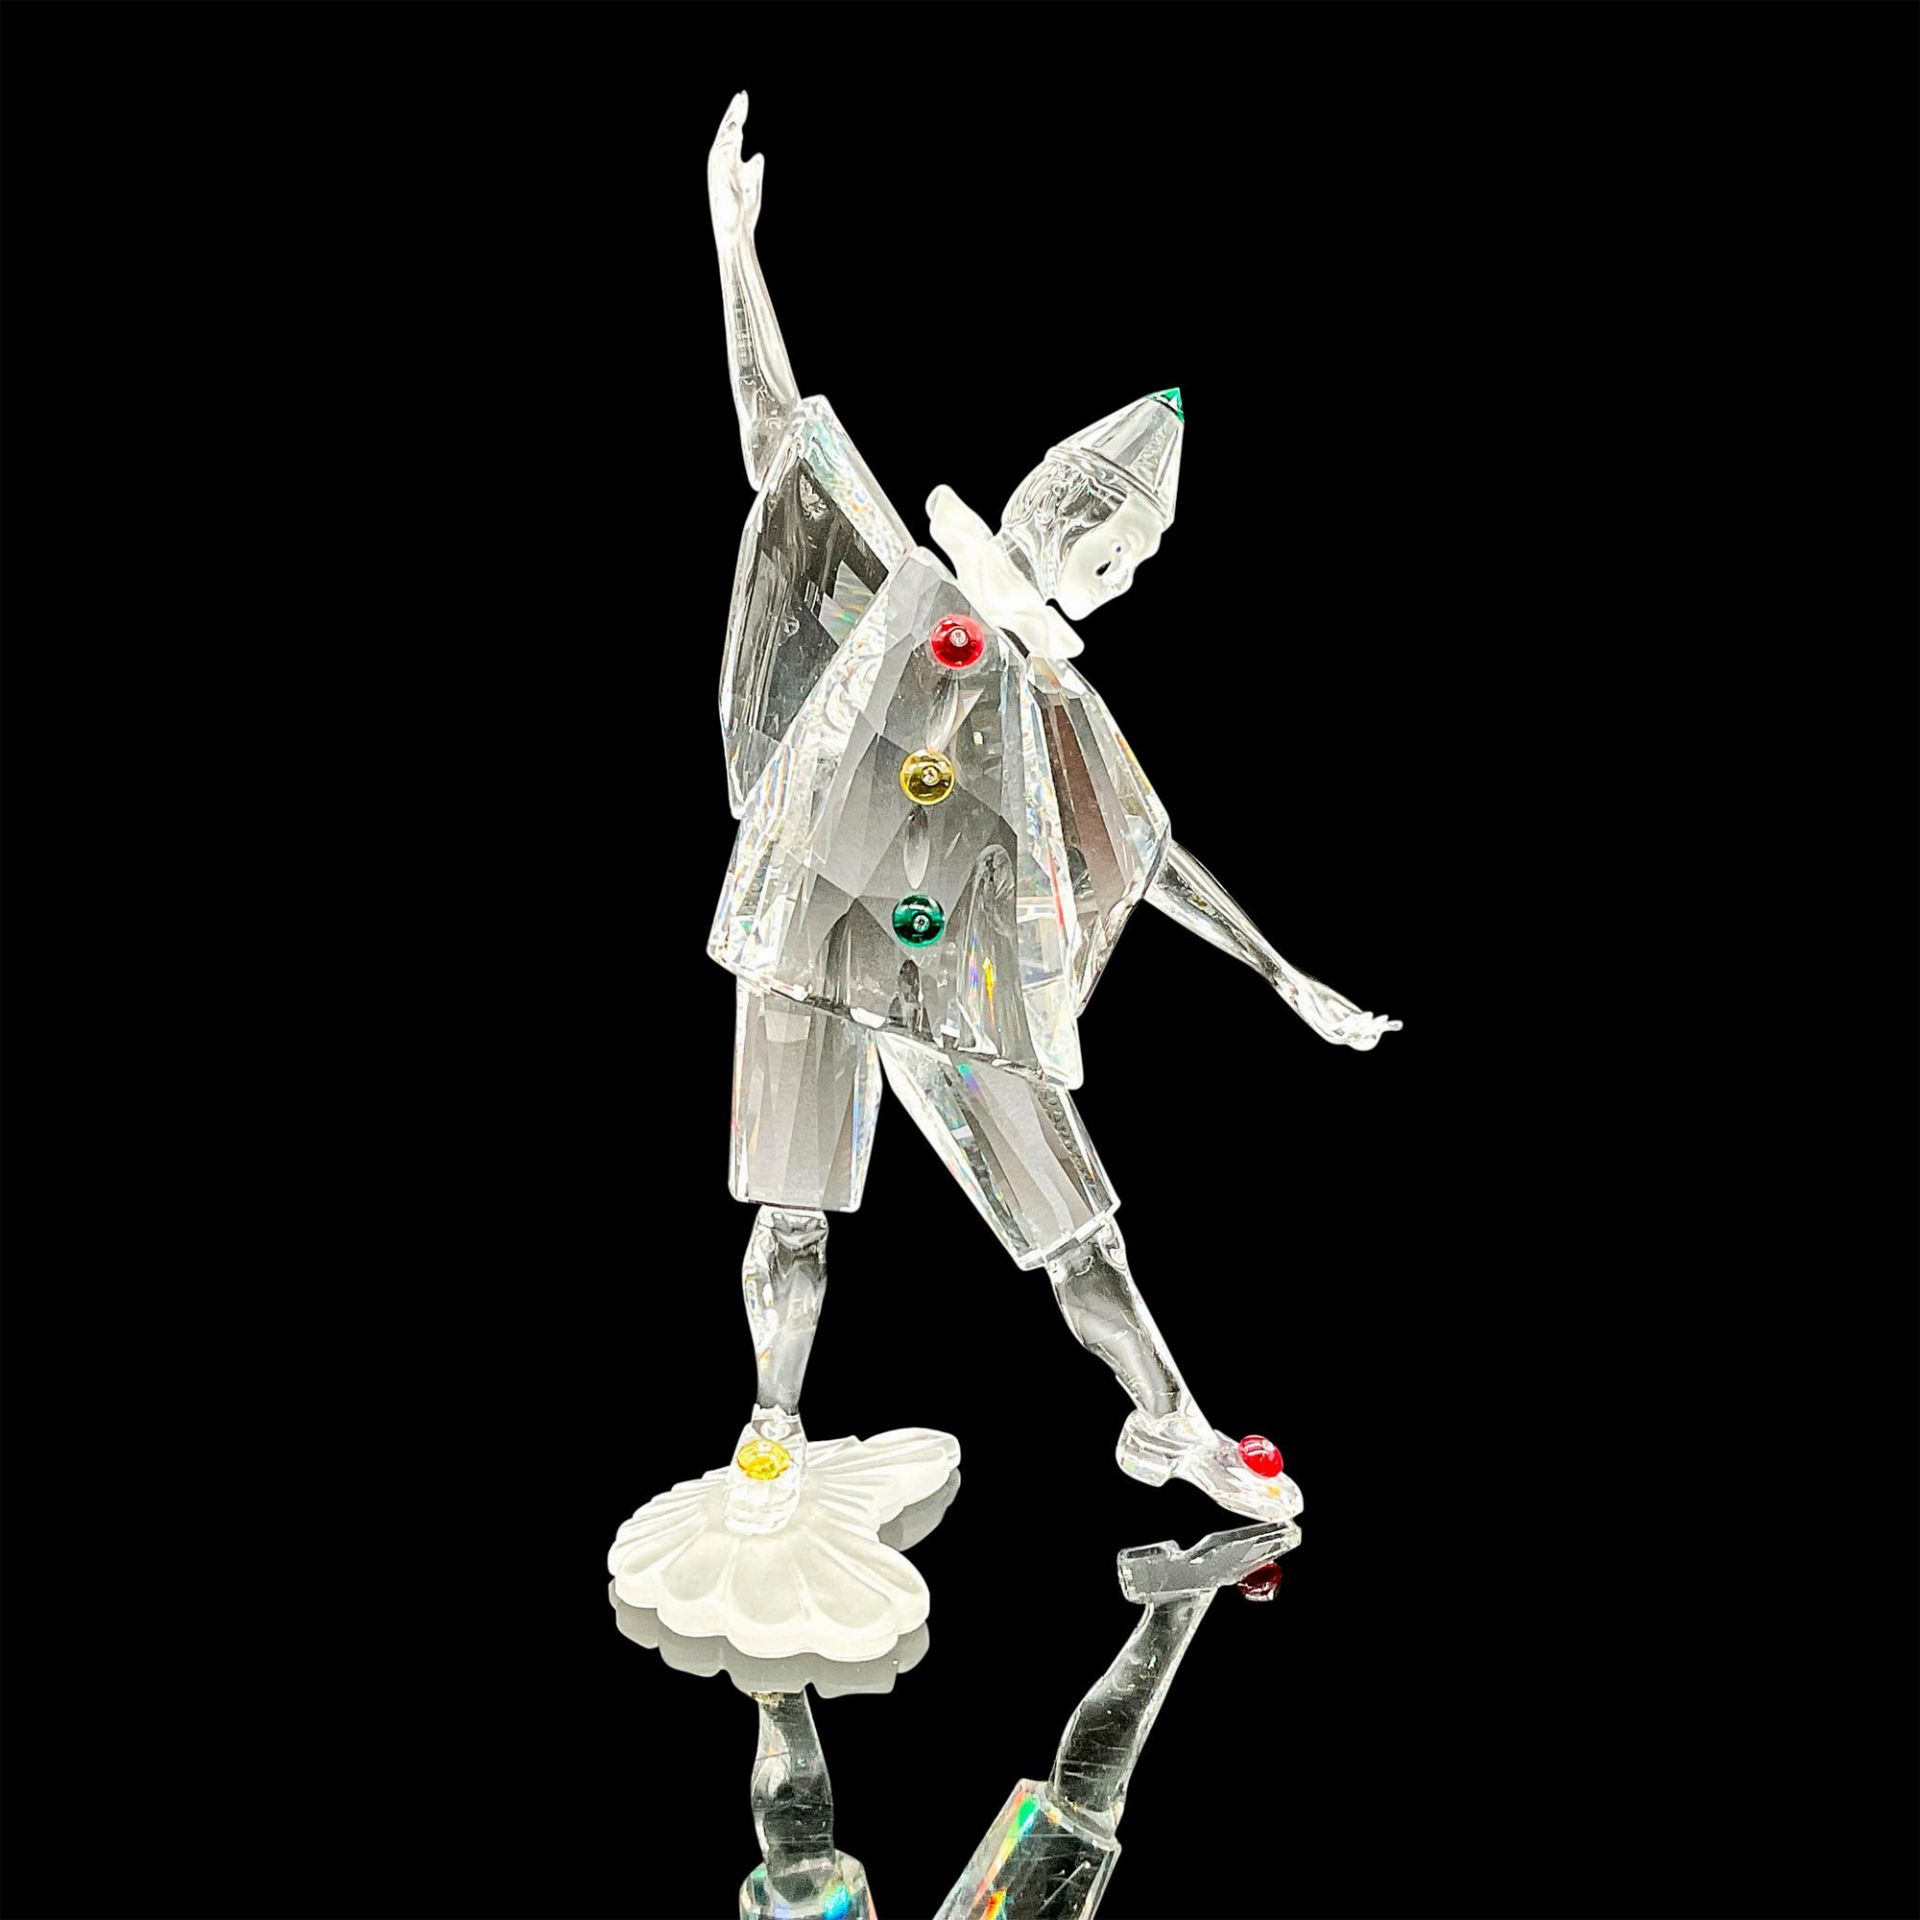 Swarovski SCS Crystal Figurine, Pierrot